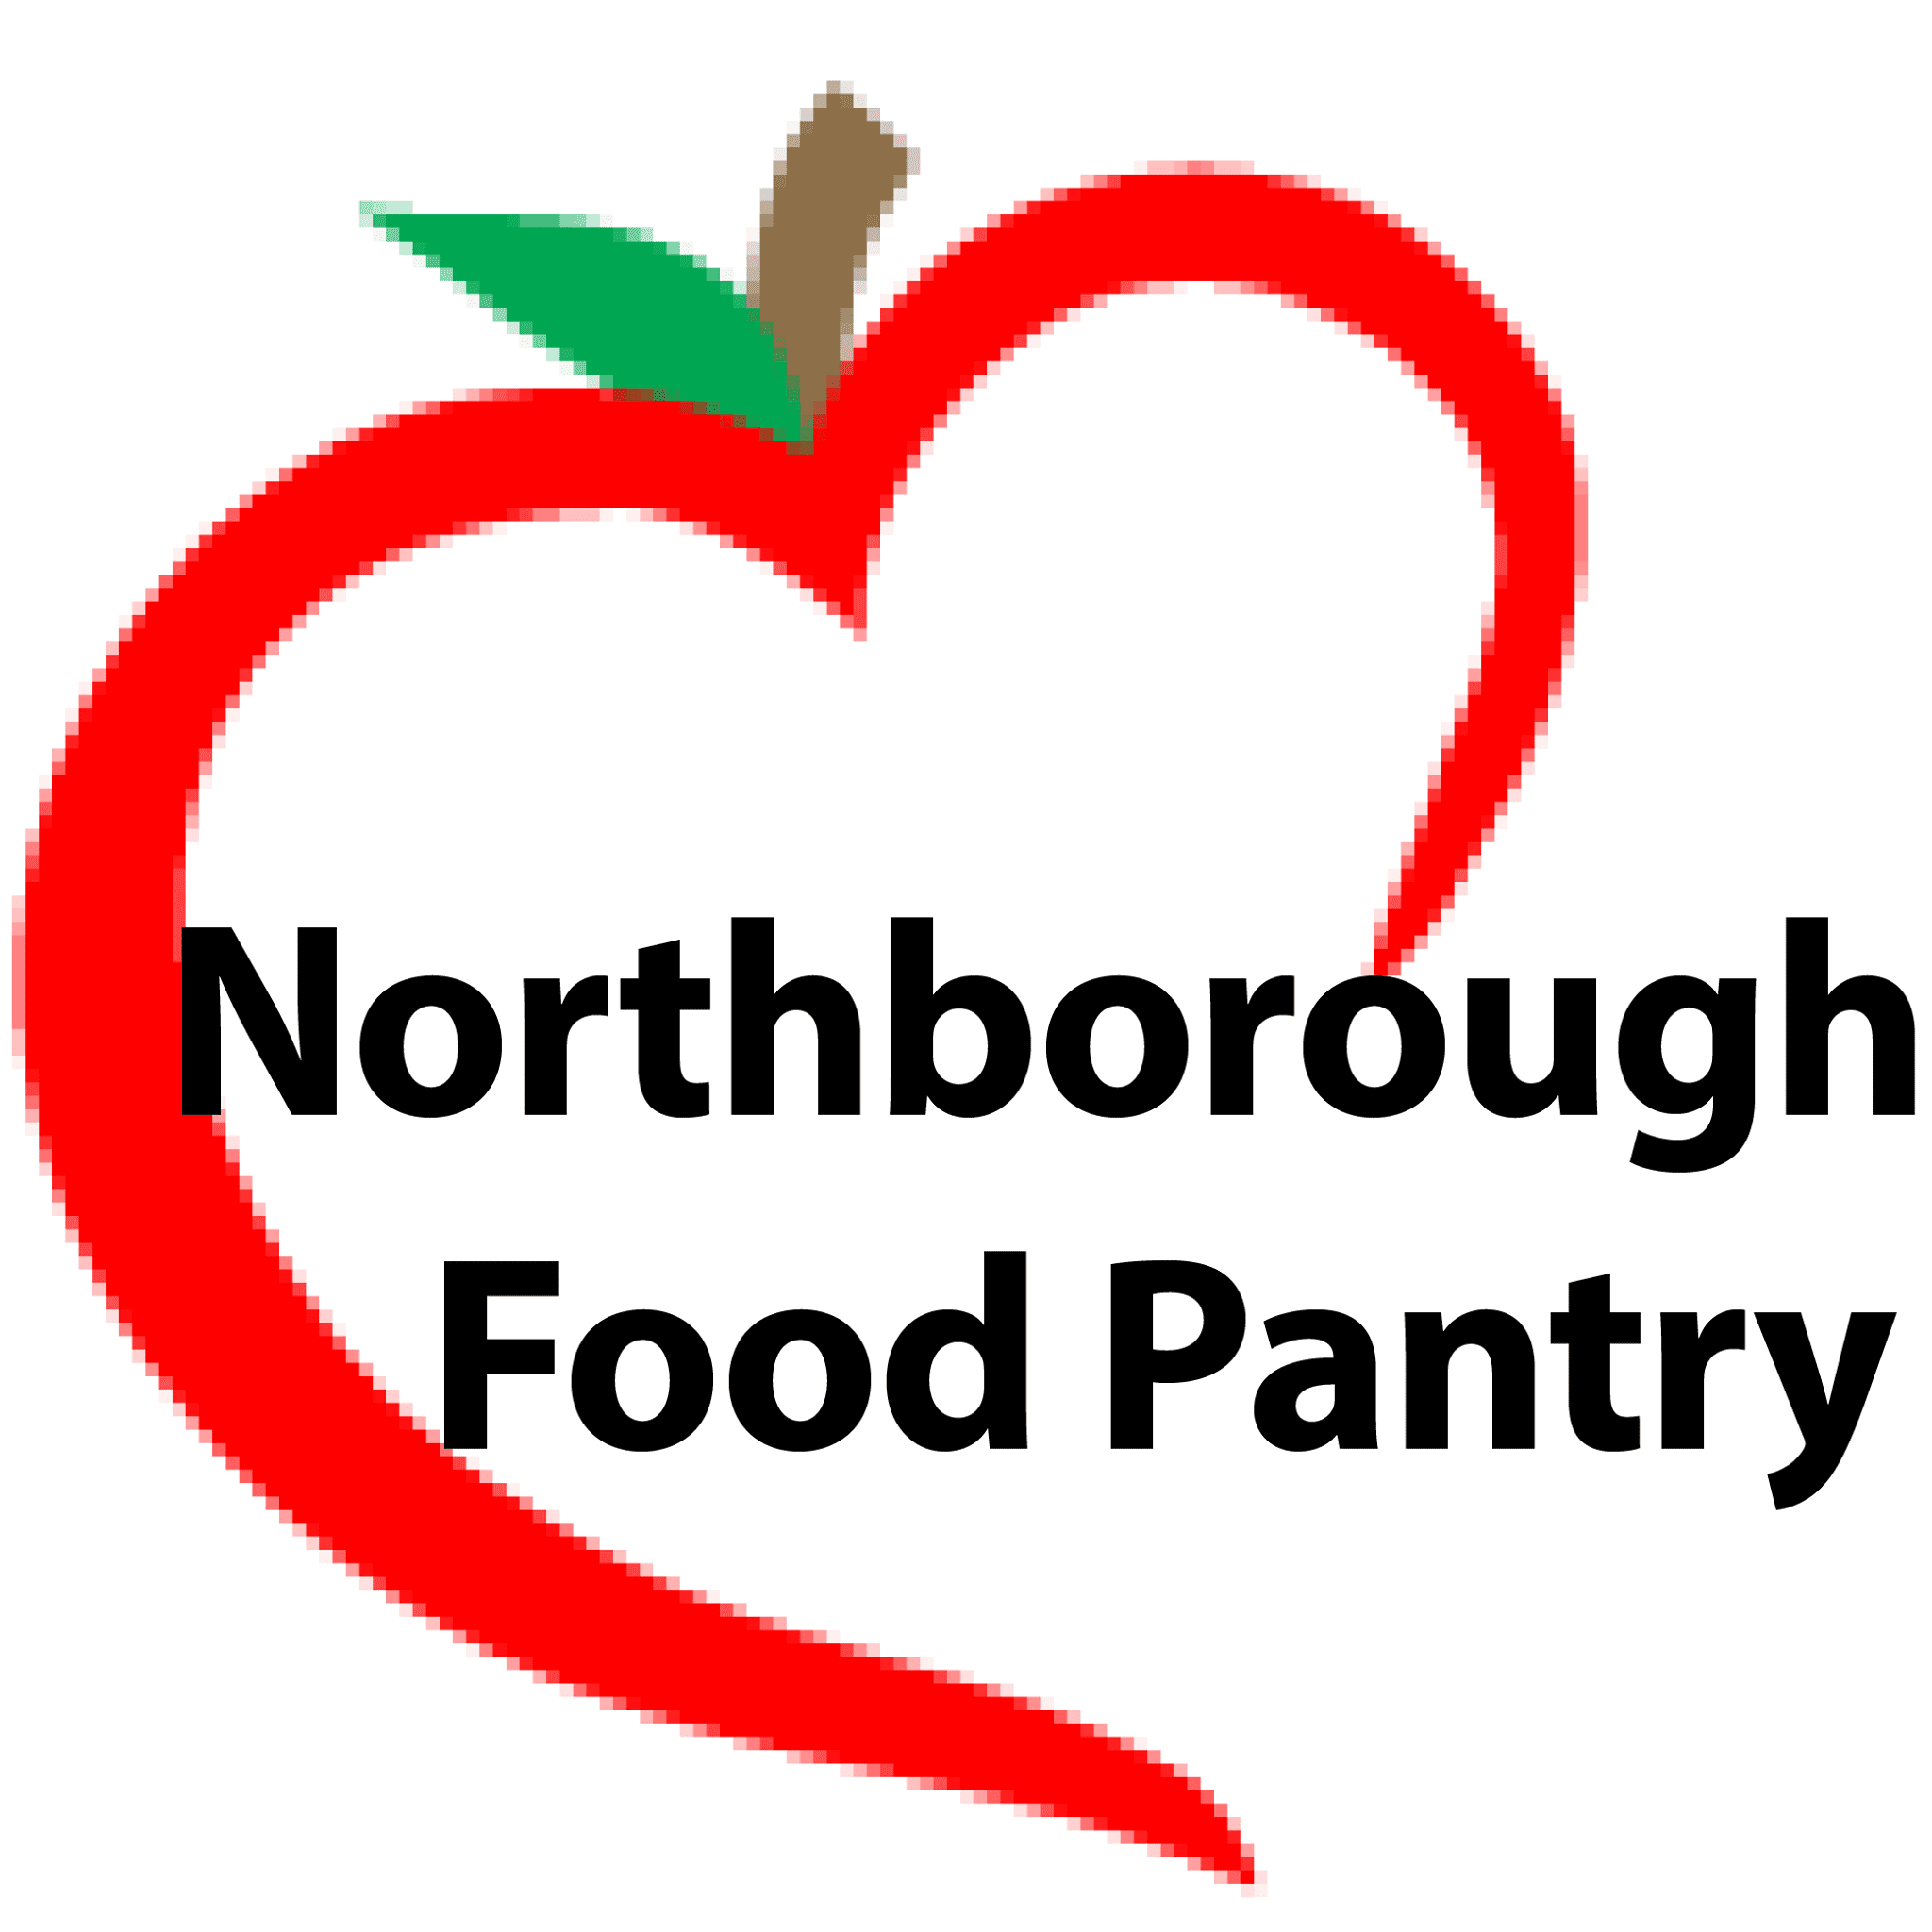 Northborough Food Pantry